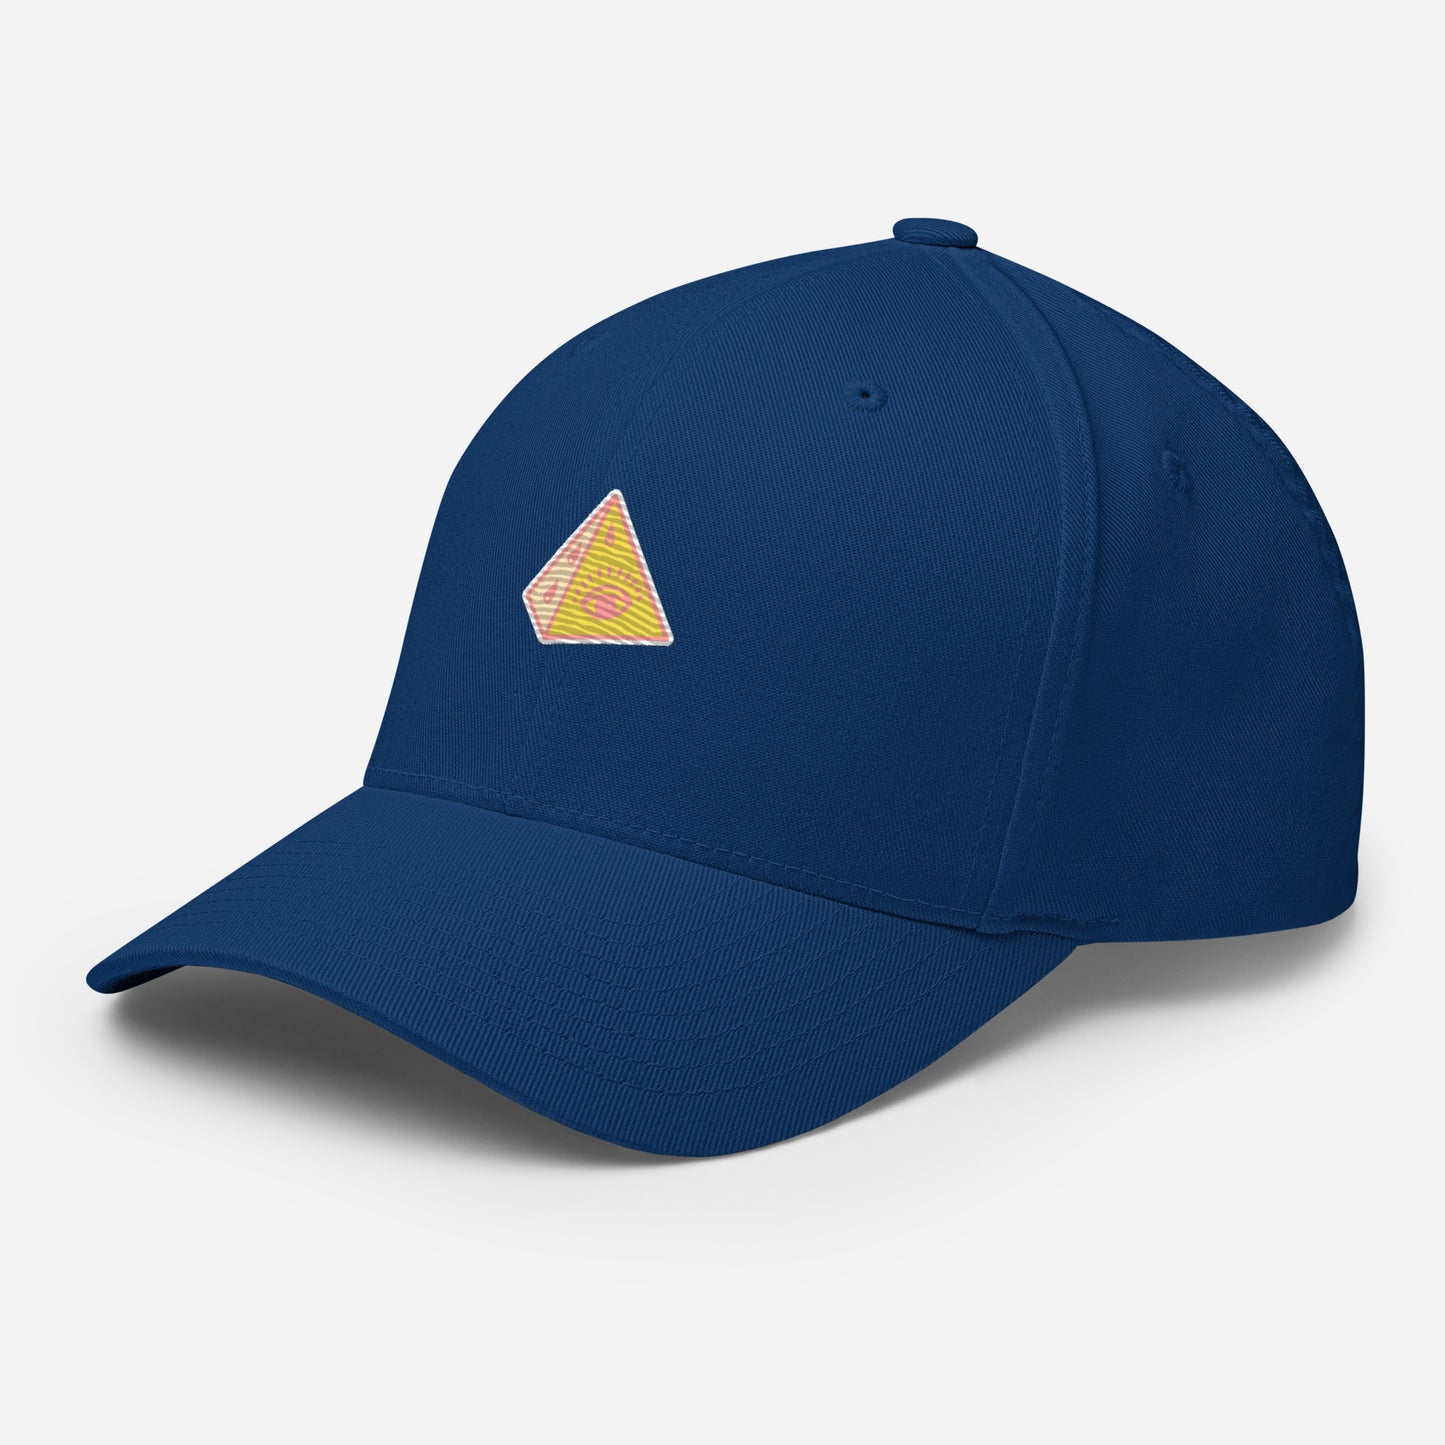 Baseball Cap with Pyramid Symbol